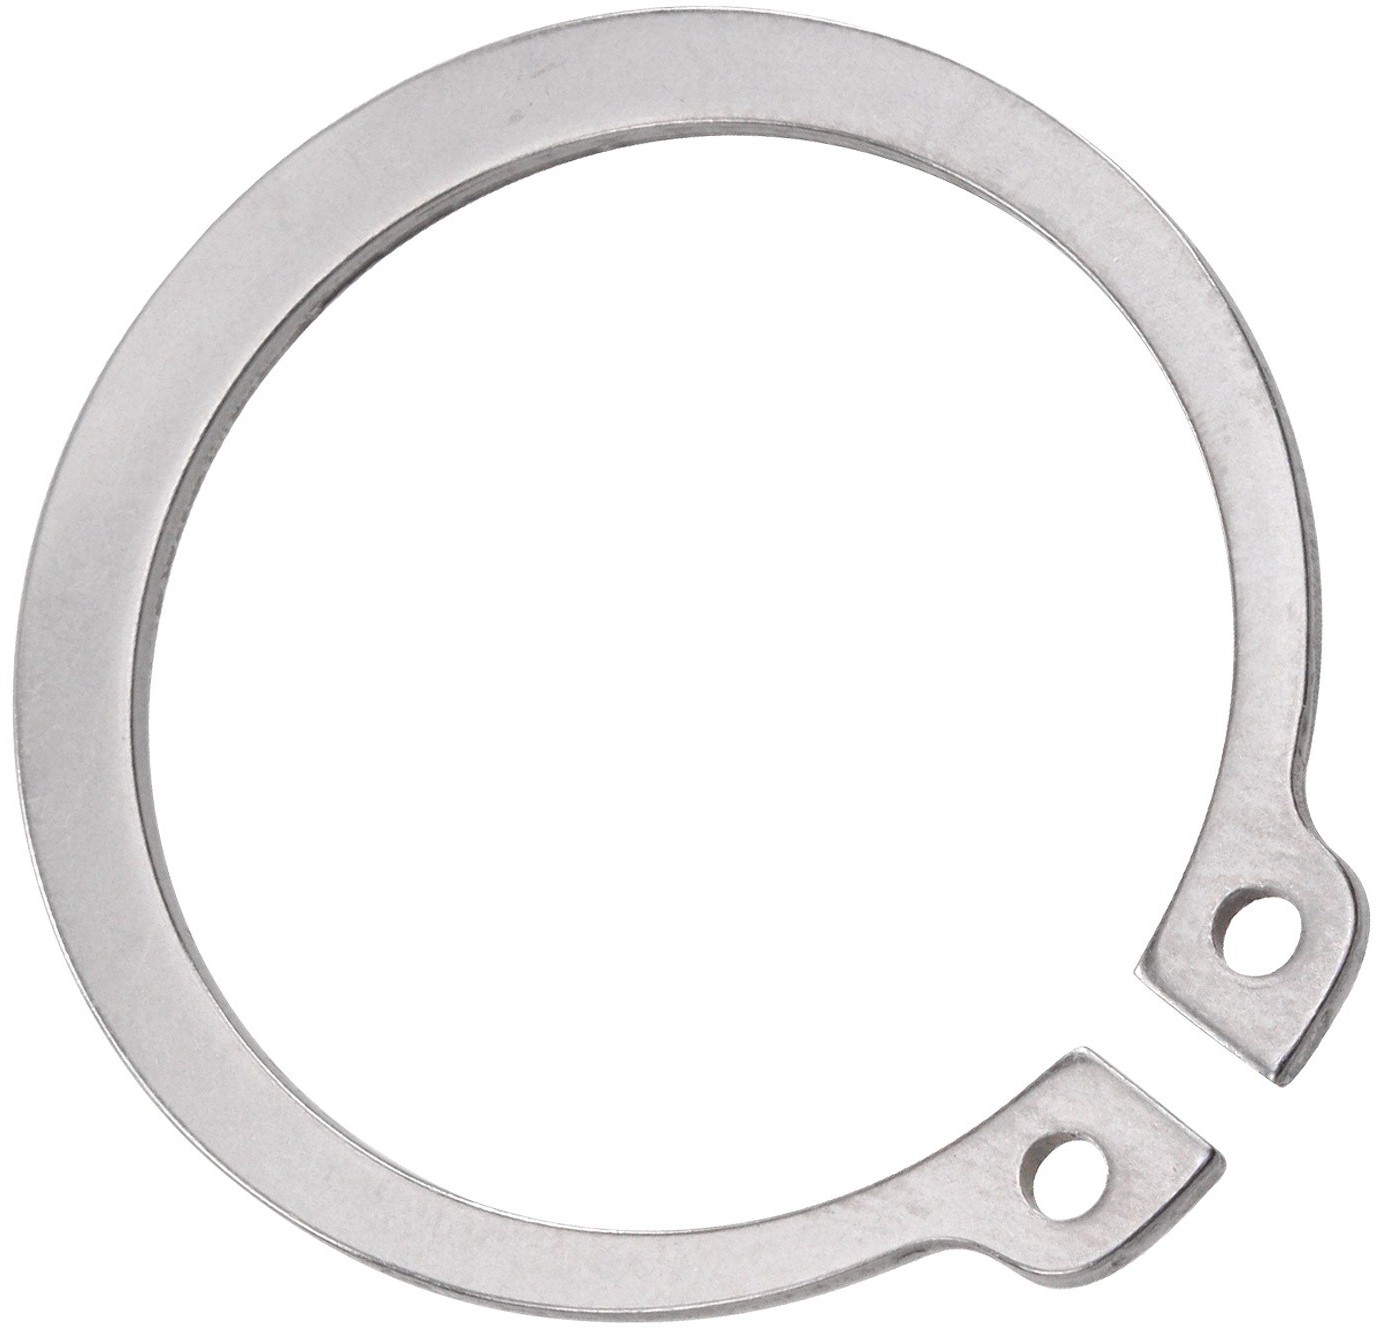 Кольцо стопорное наружное 13х1 DIN 471, нержавеющая сталь 1.4122 (А2) - фото